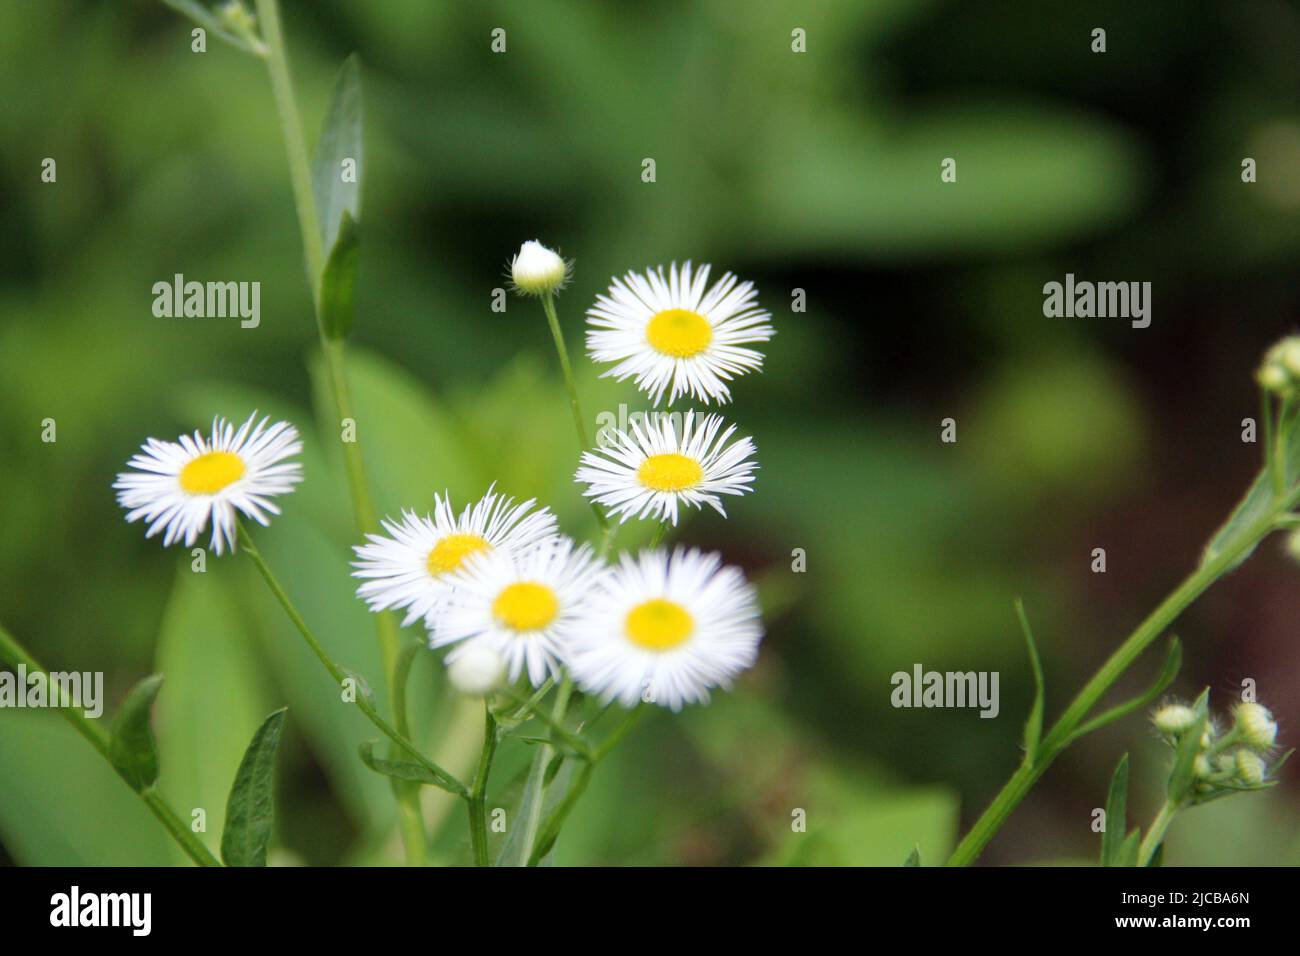 Eastern Daisy Fleabane, aka Annual Fleabane, scientific name Erigeron annuus, wild flowers, close-up, seen in Latourette Park, Staten Island, NY, USA Stock Photo